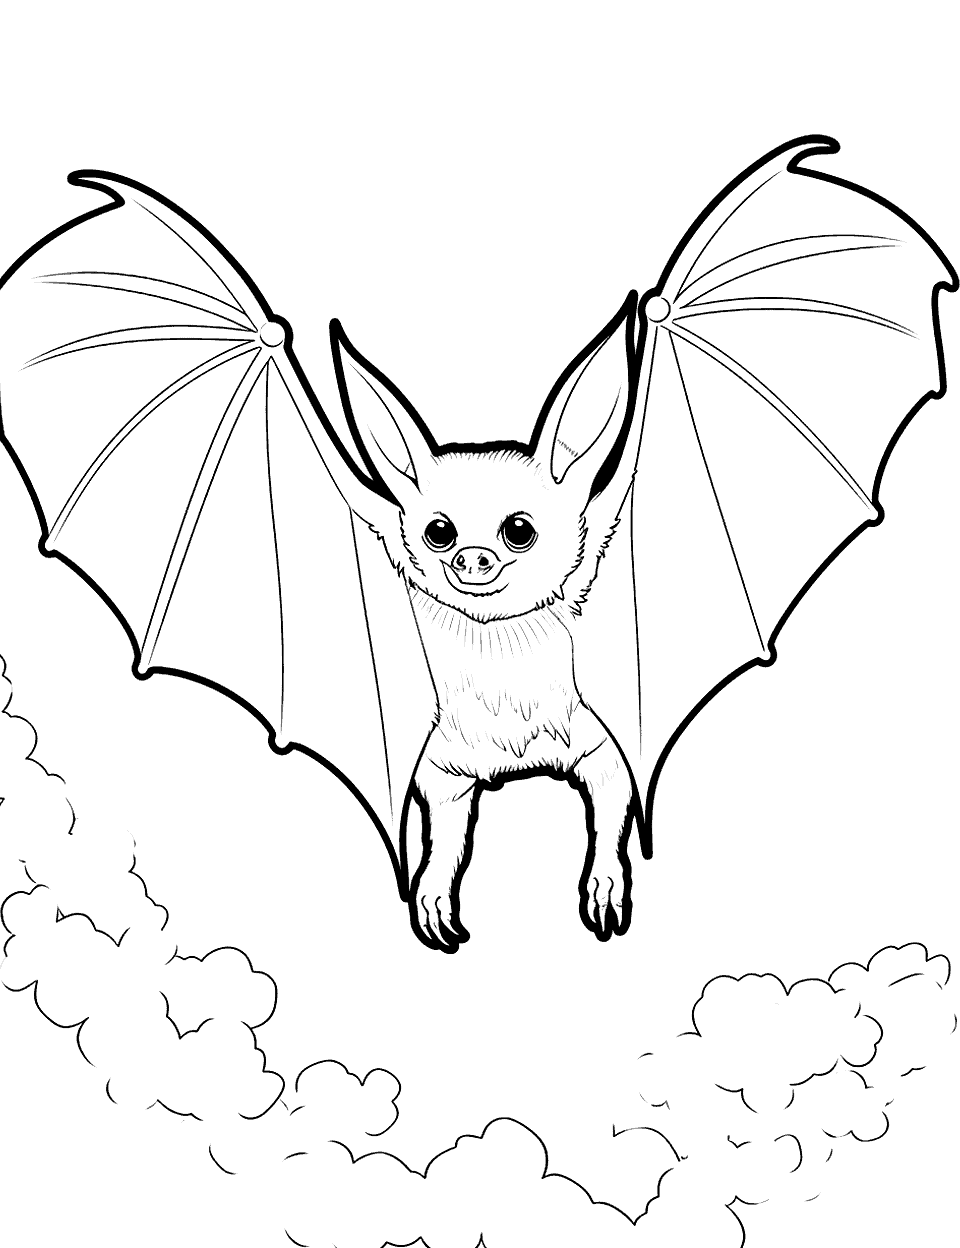 Majestic Megachiroptera in the Sky Bat Coloring Page - A large Megachiroptera bat soaring in the sky.